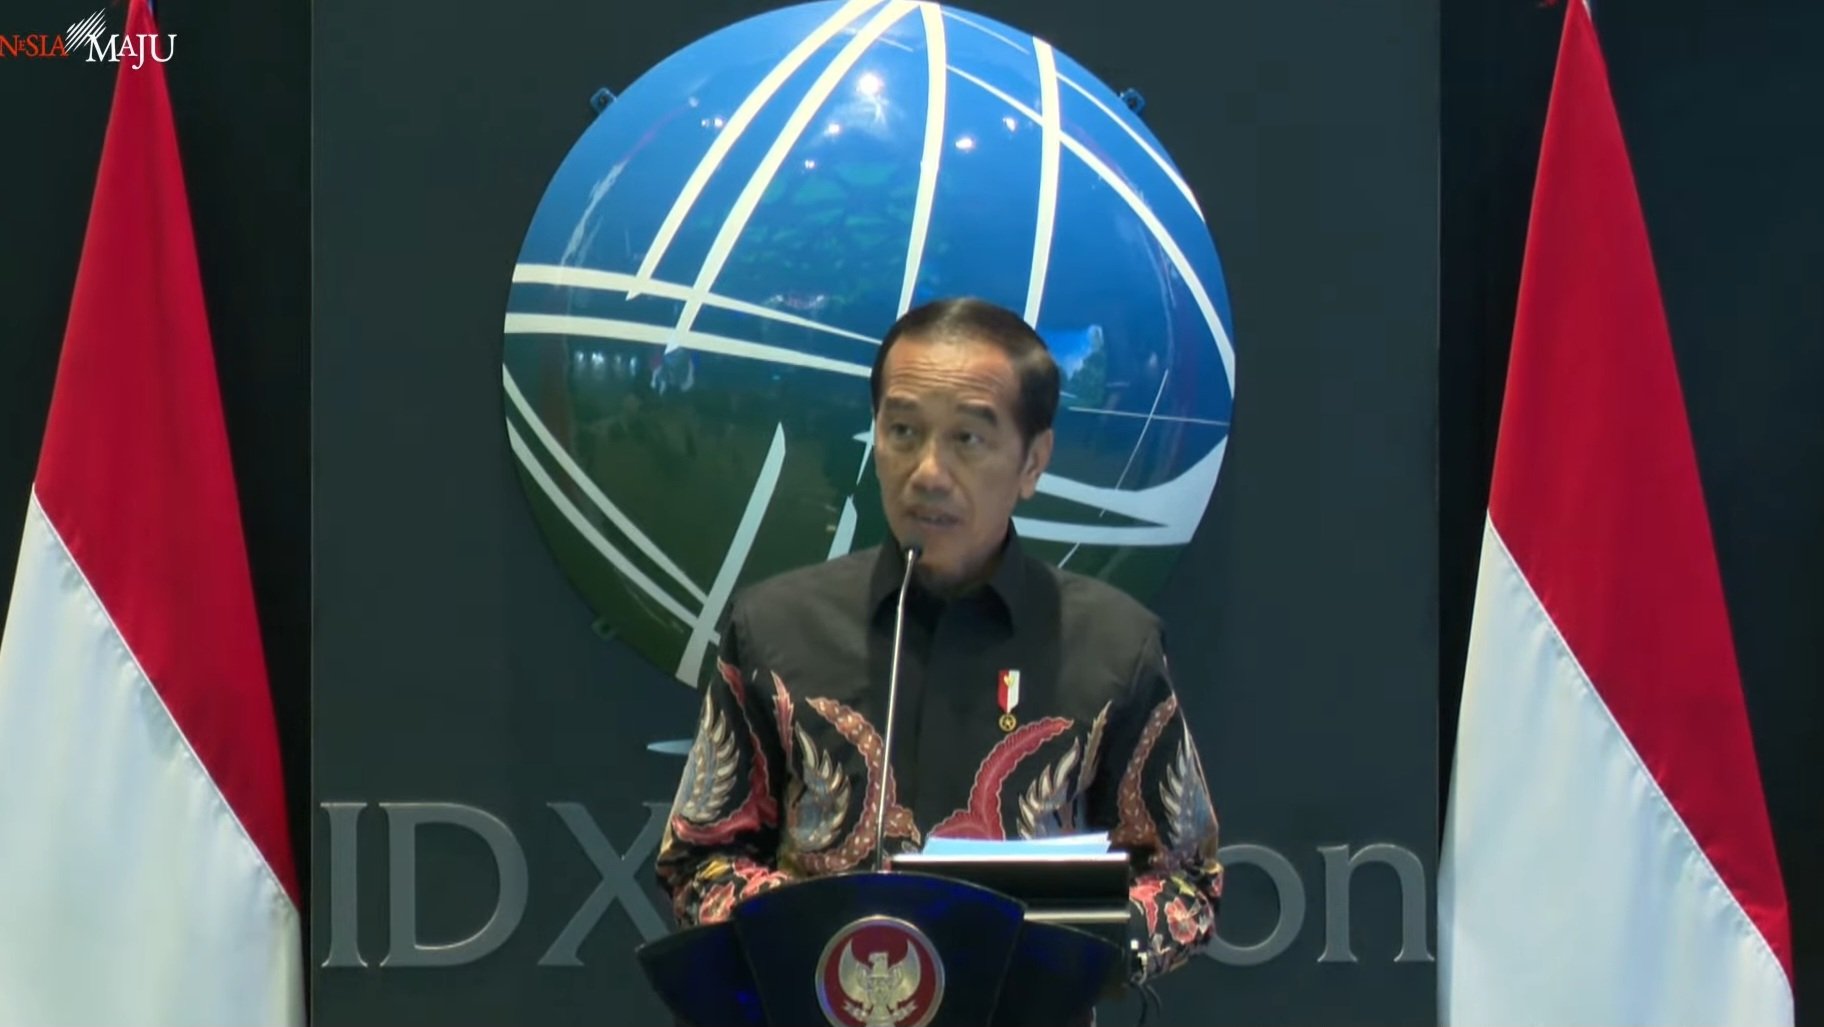 Presiden Jokowi membuka Bursa Karbon Indoneisa. (SinPo.id/Setkab)